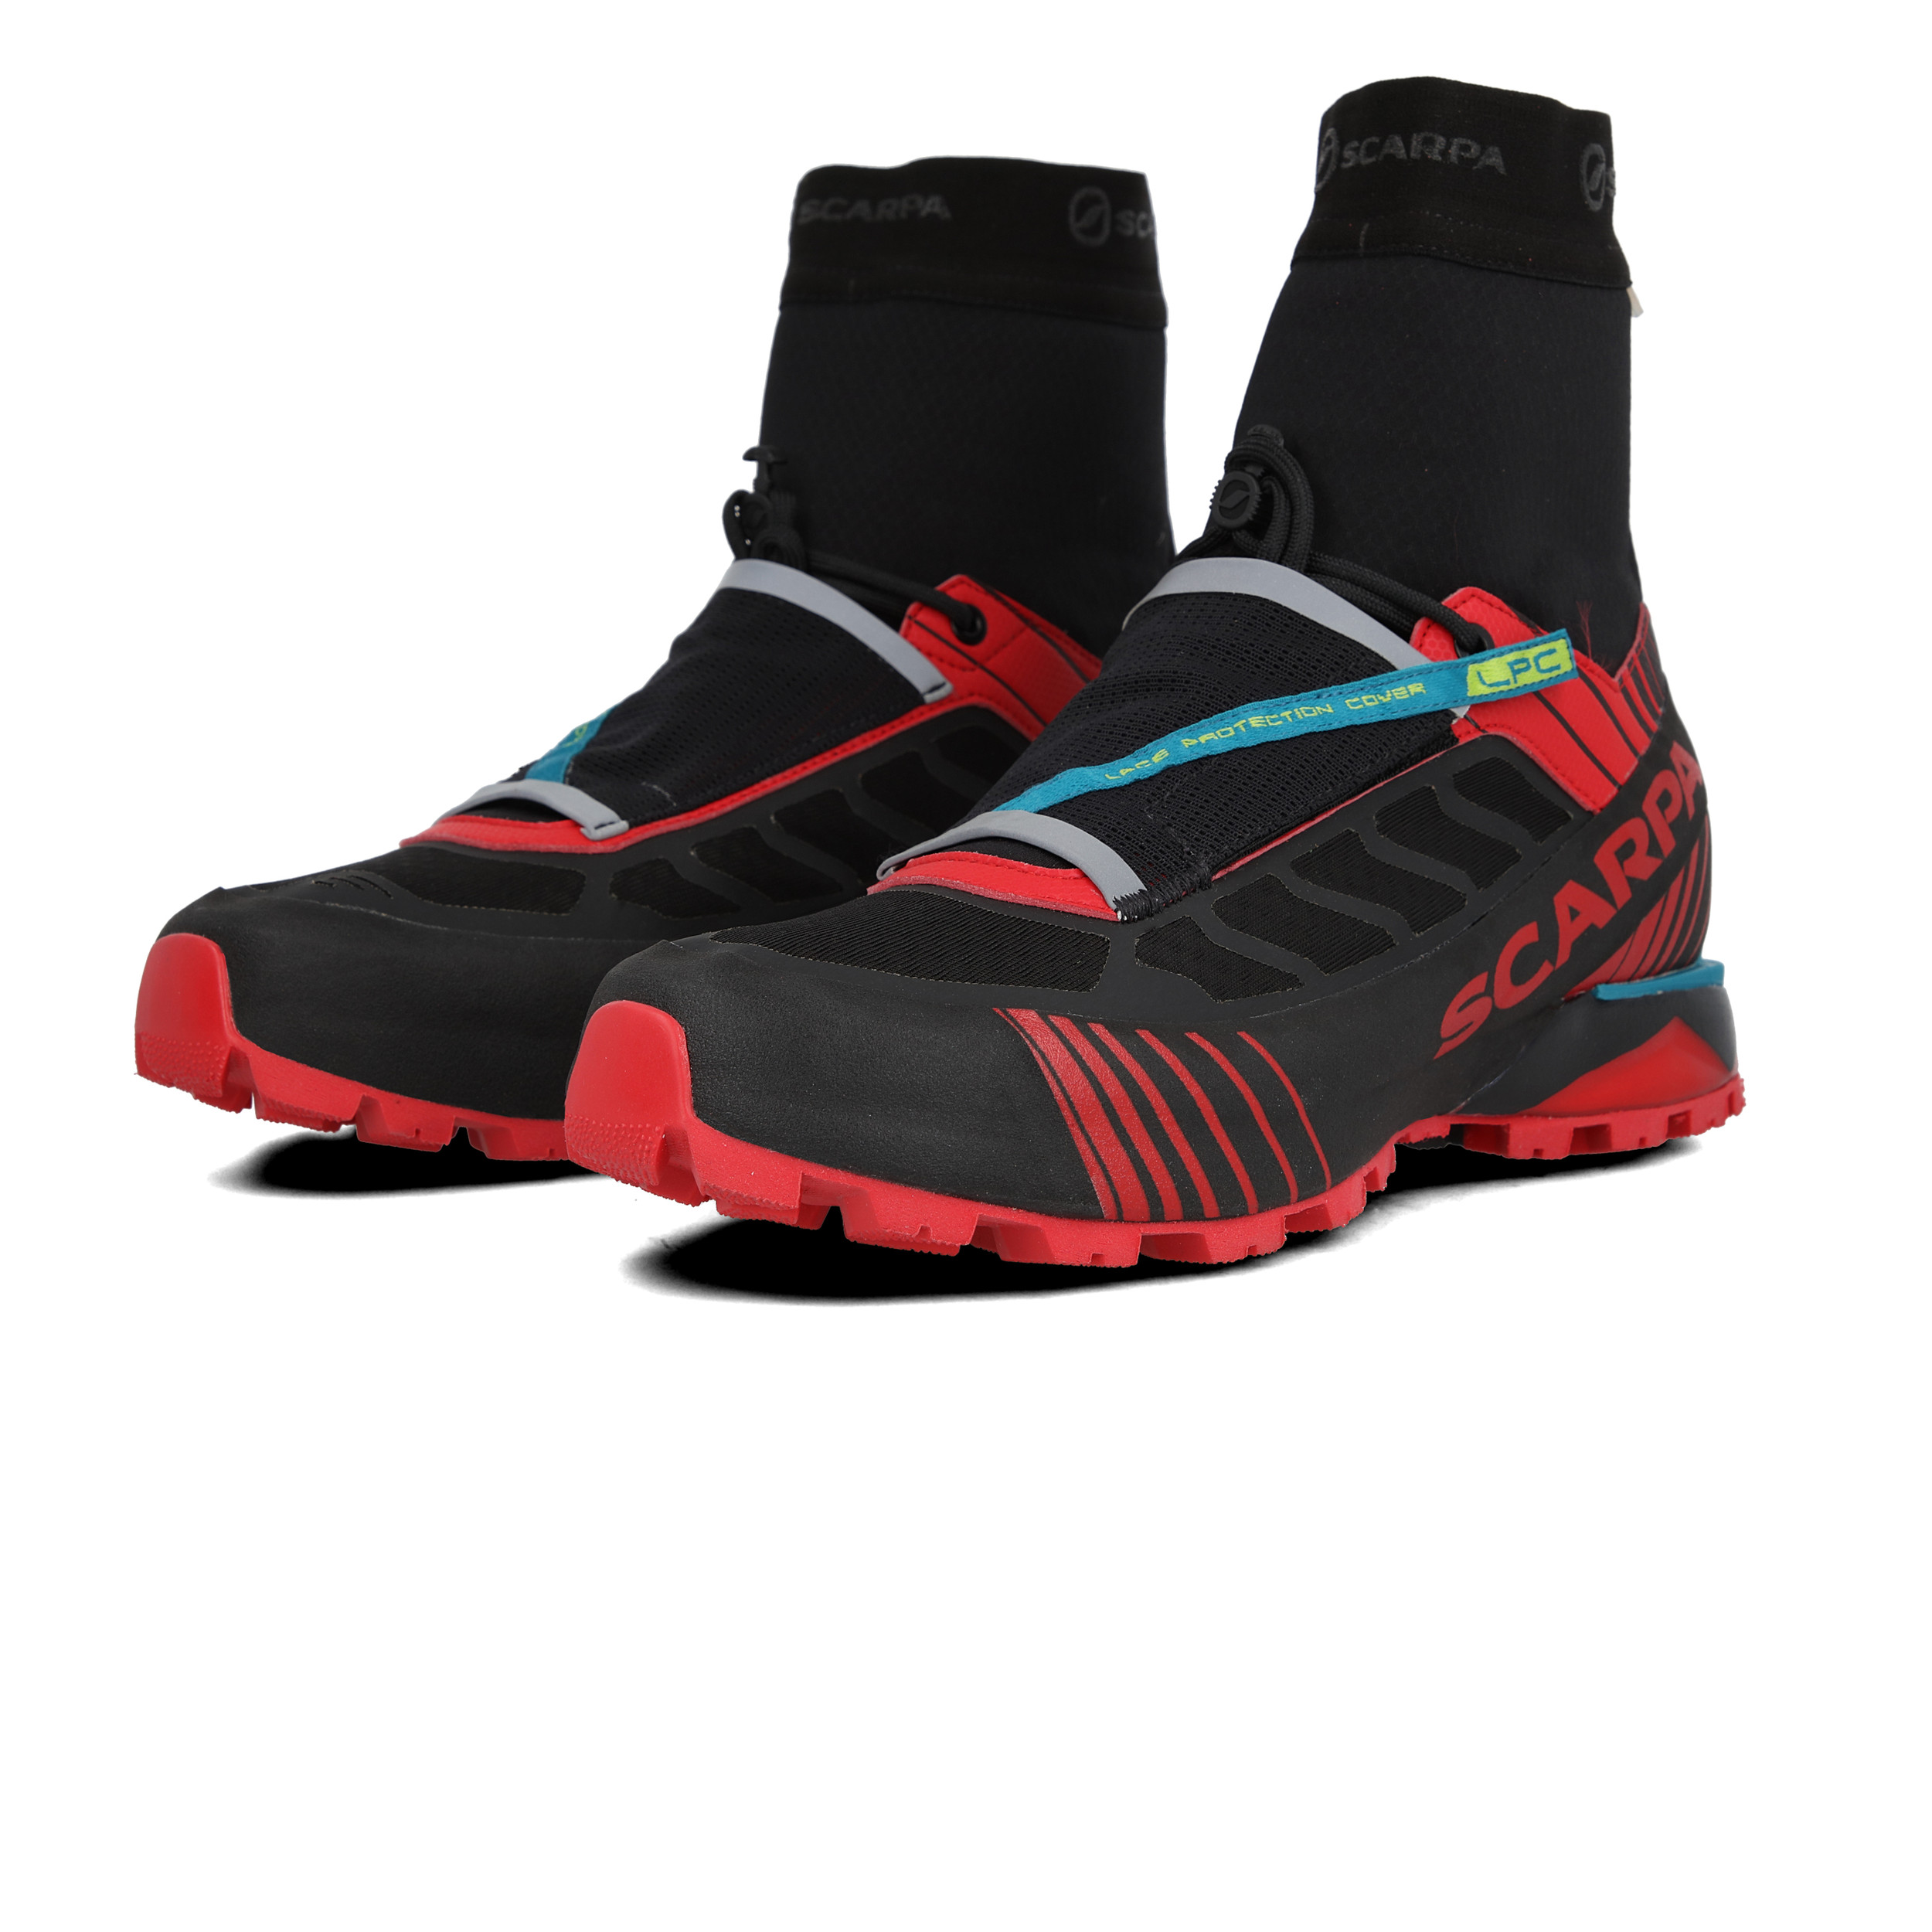 Scarpa Atom Tech OD chaussures de trail